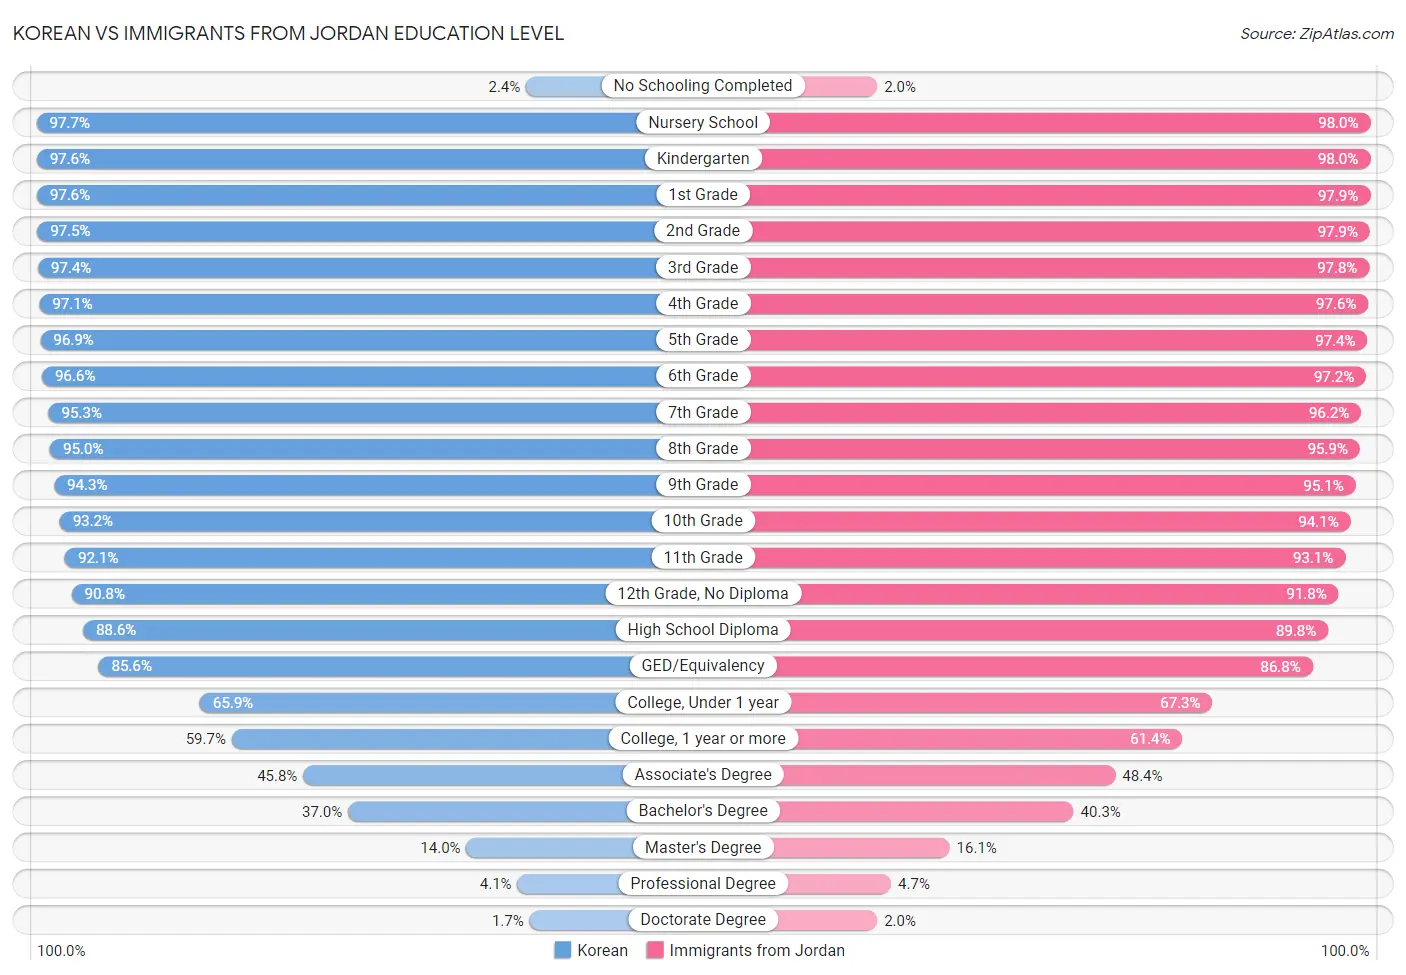 Korean vs Immigrants from Jordan Education Level